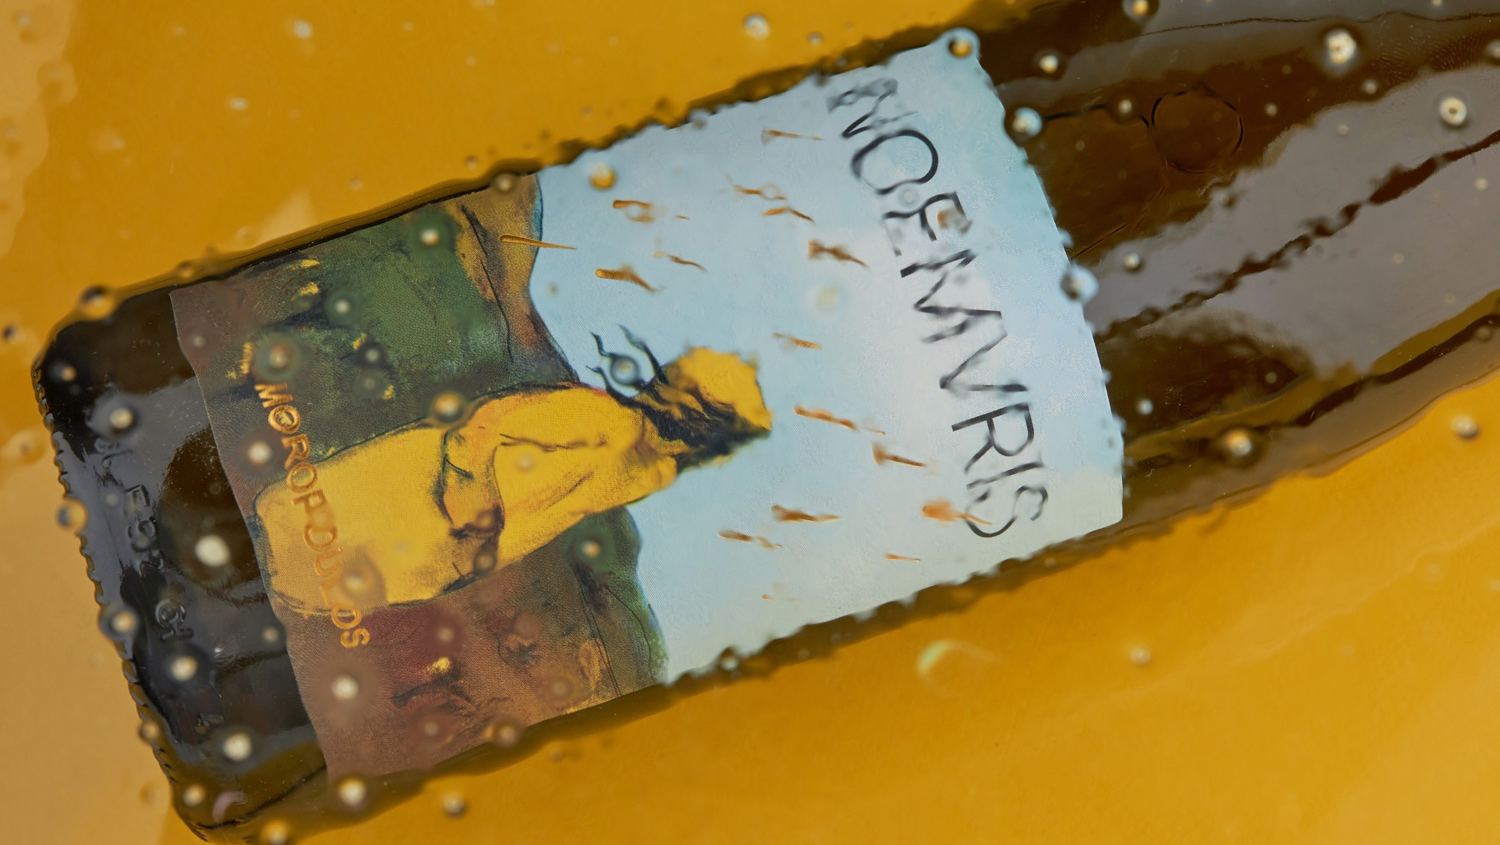 Noemvris’ Wine Label Reflects A Sense Of Adventure